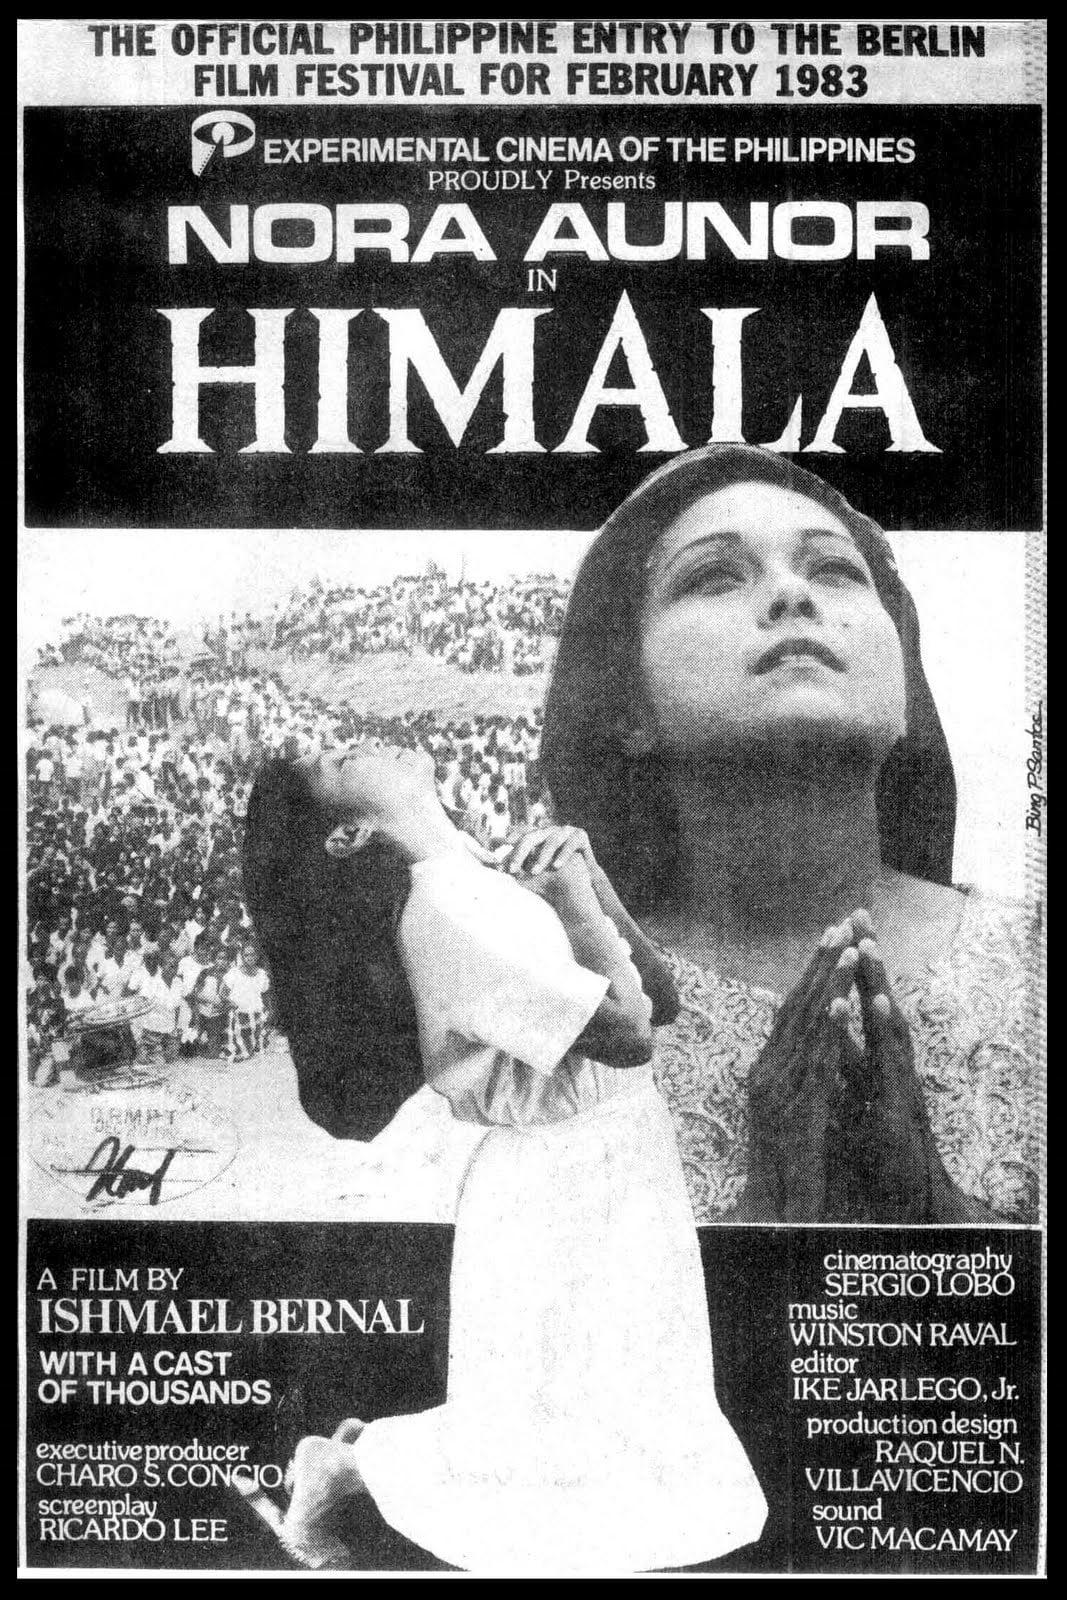 Himala poster